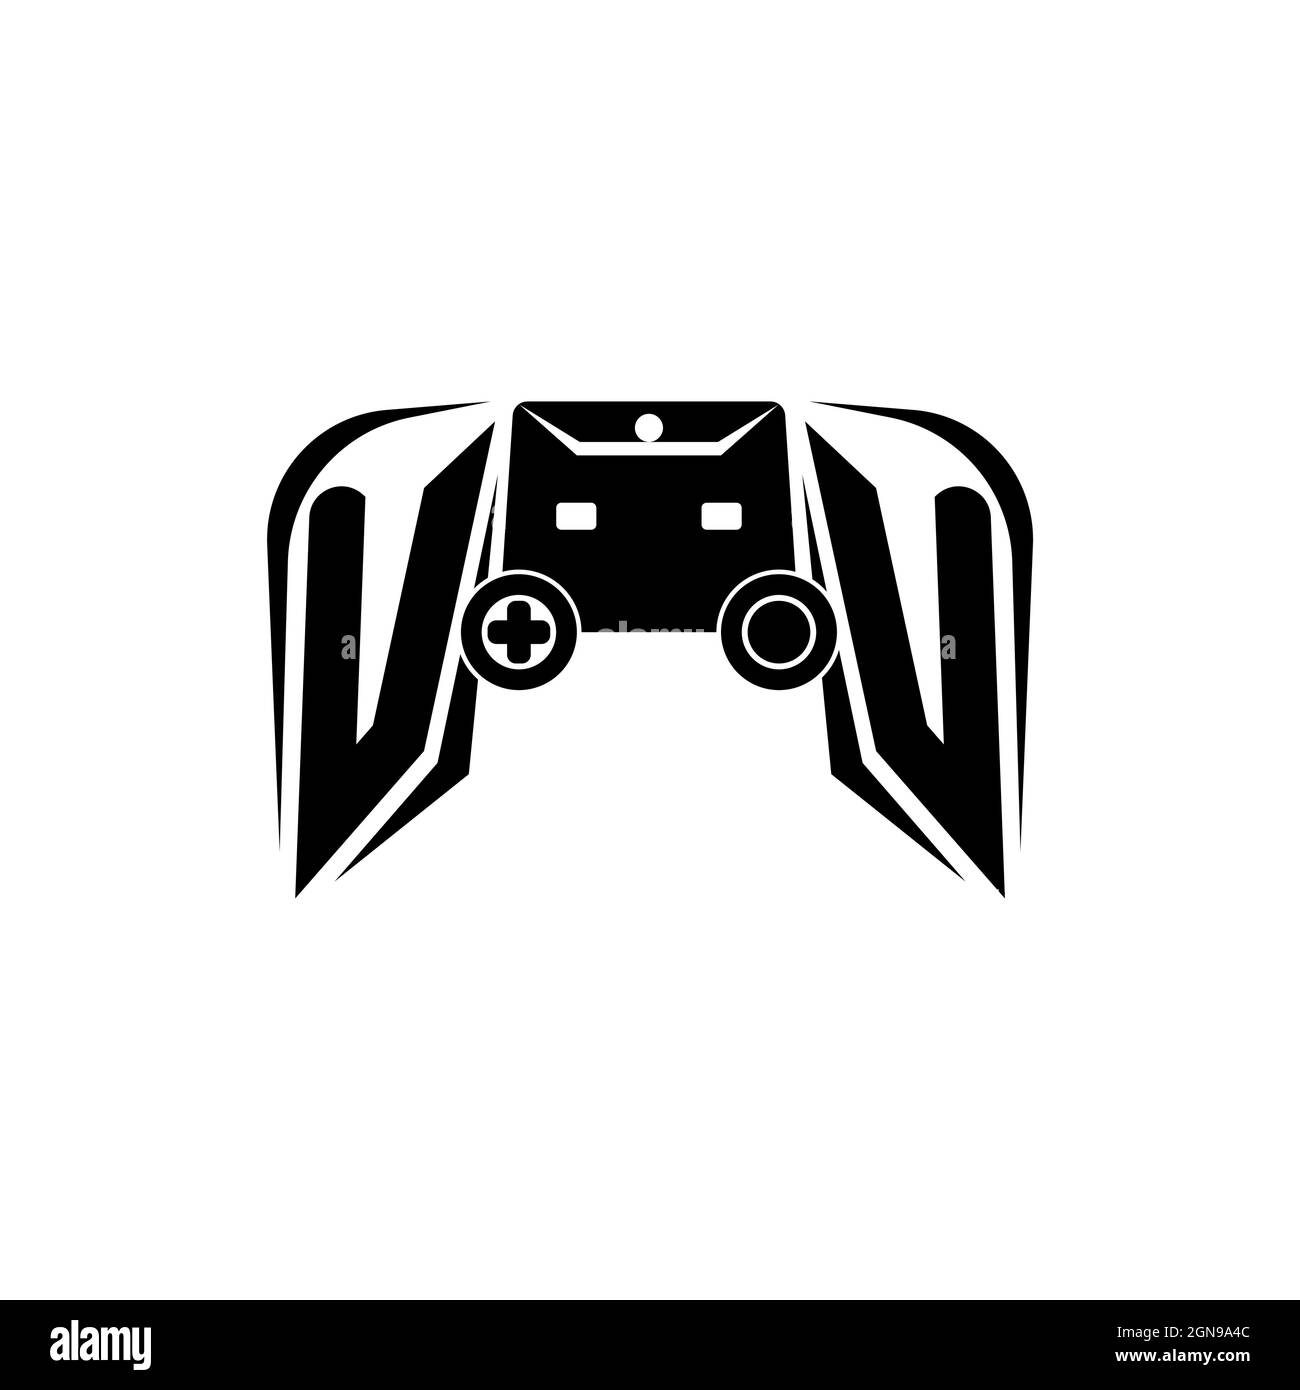 Gaming logo Black and White Stock Photos & Images - Alamy